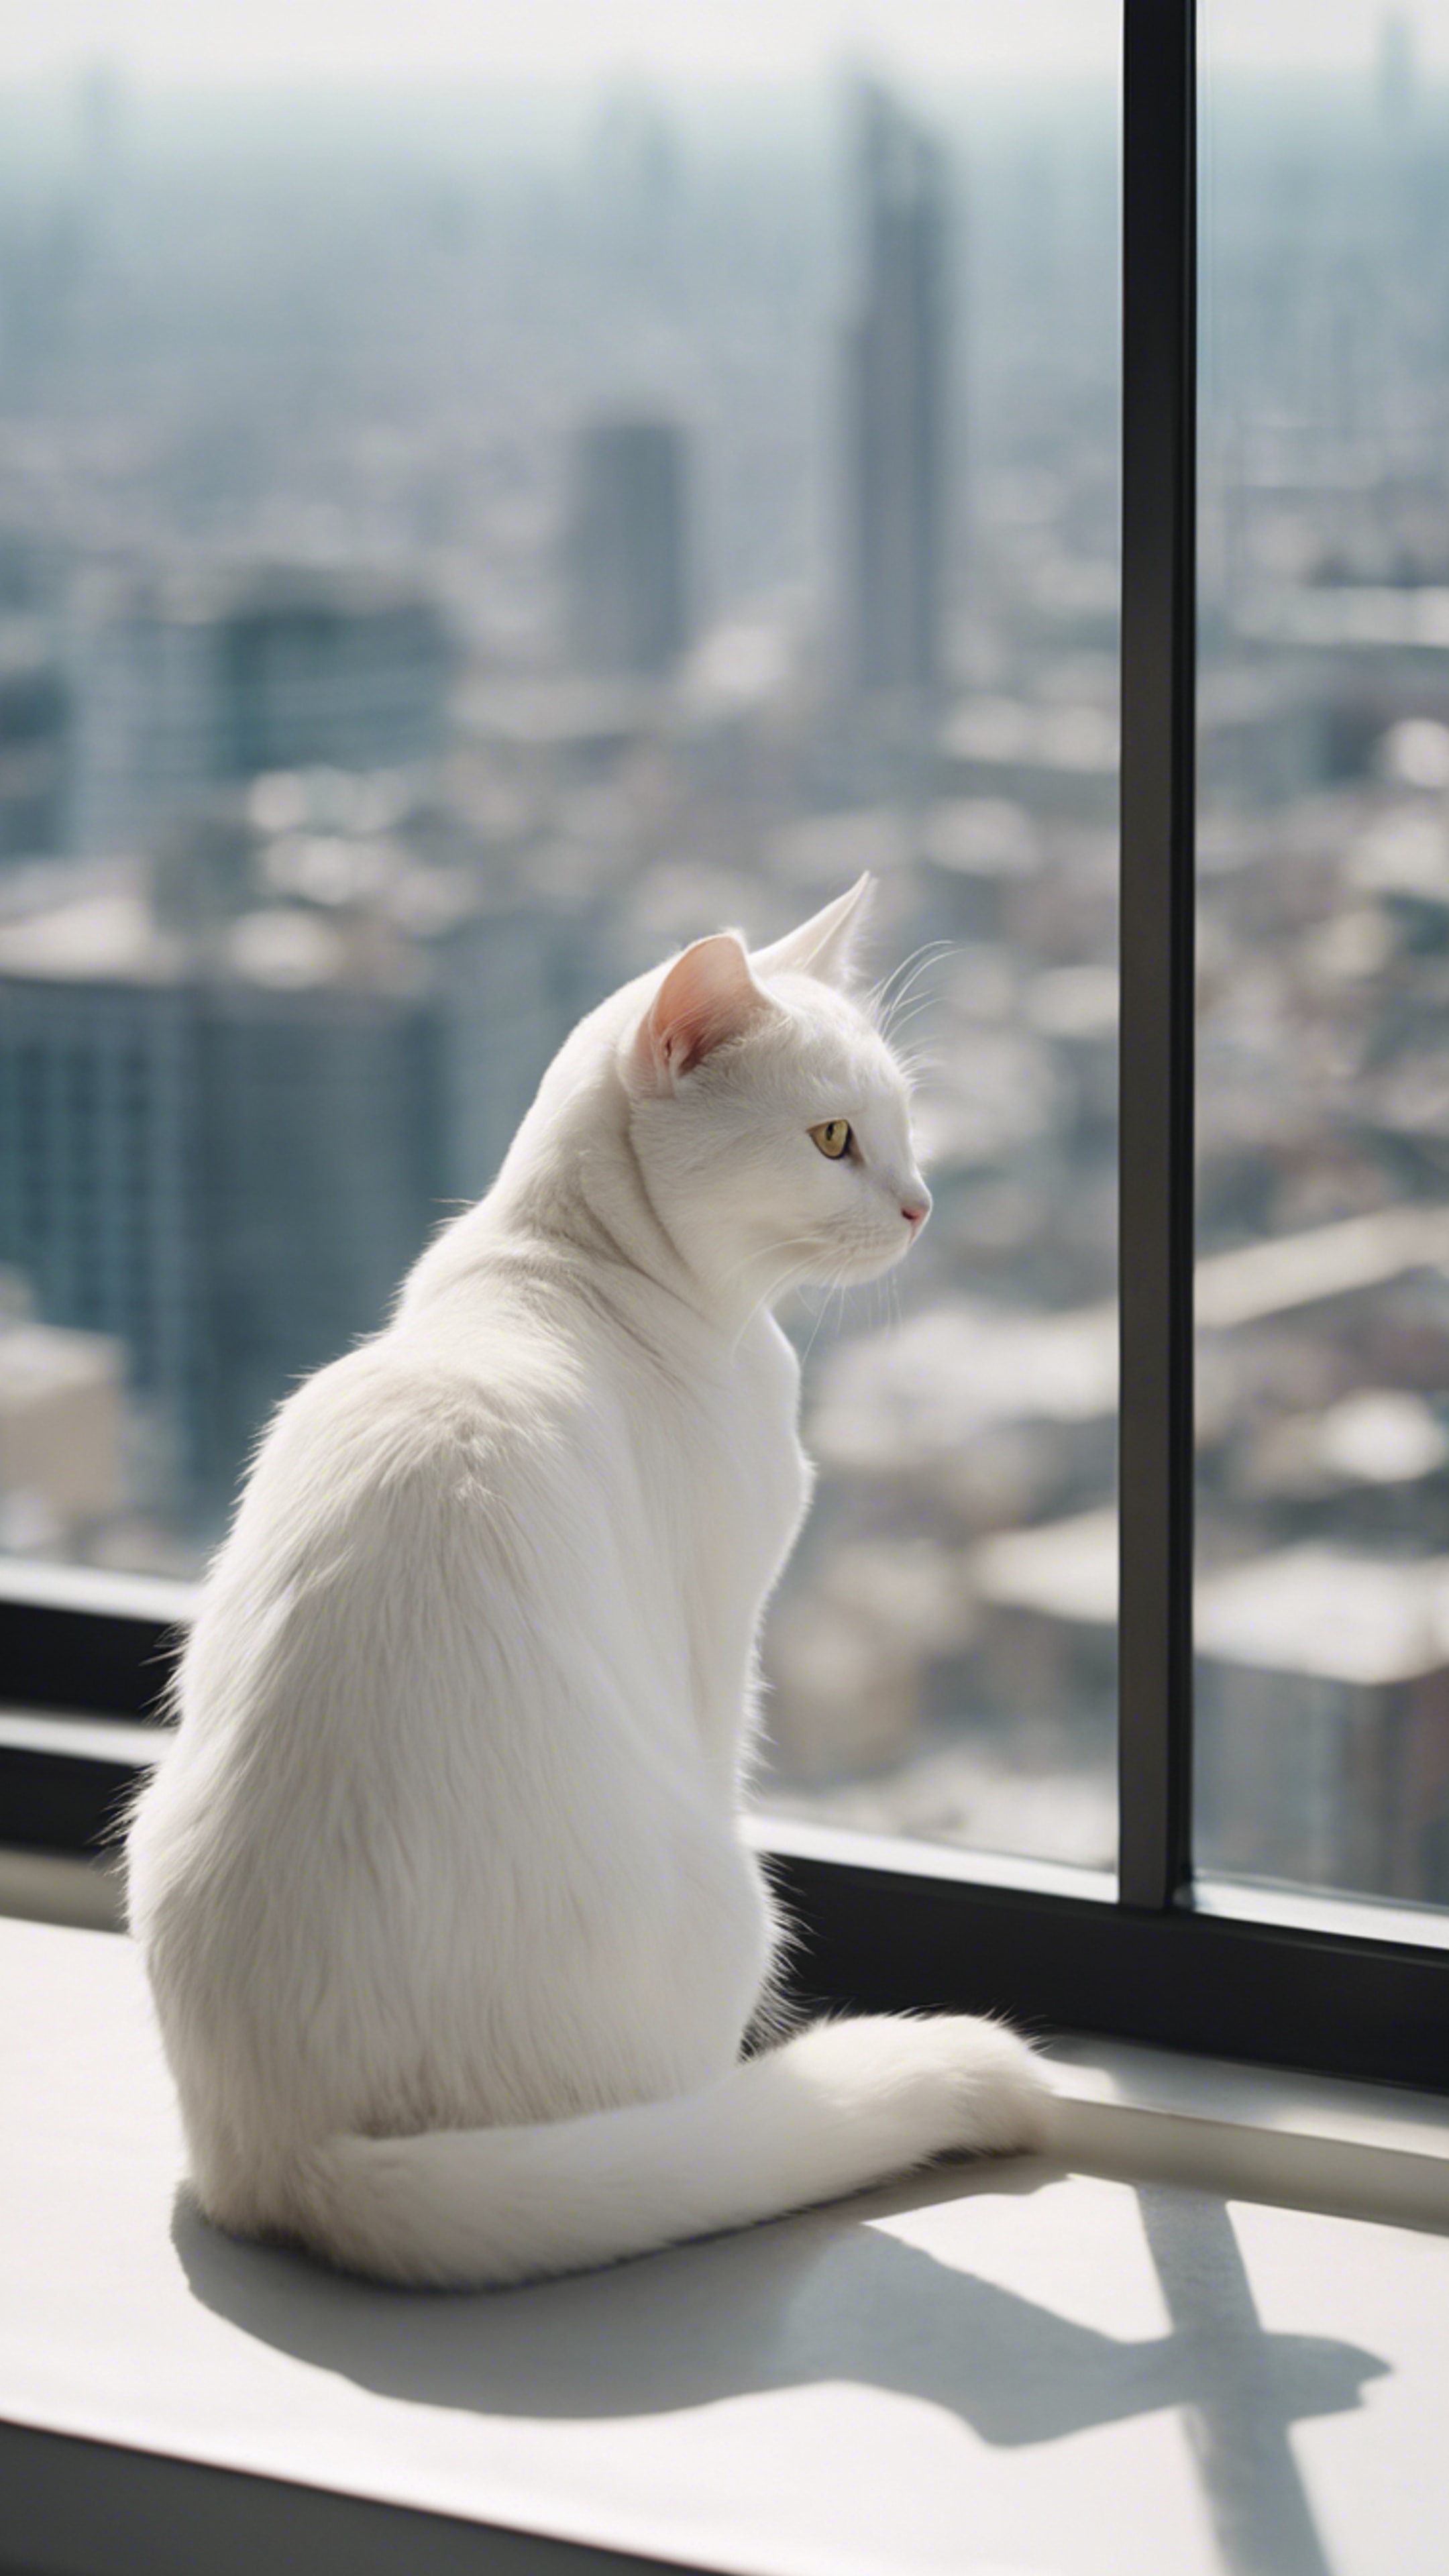 A white cat lying peacefully on a windowsill, admiring a city view from a skyscraper. Divar kağızı[751c381e97644d32a2eb]